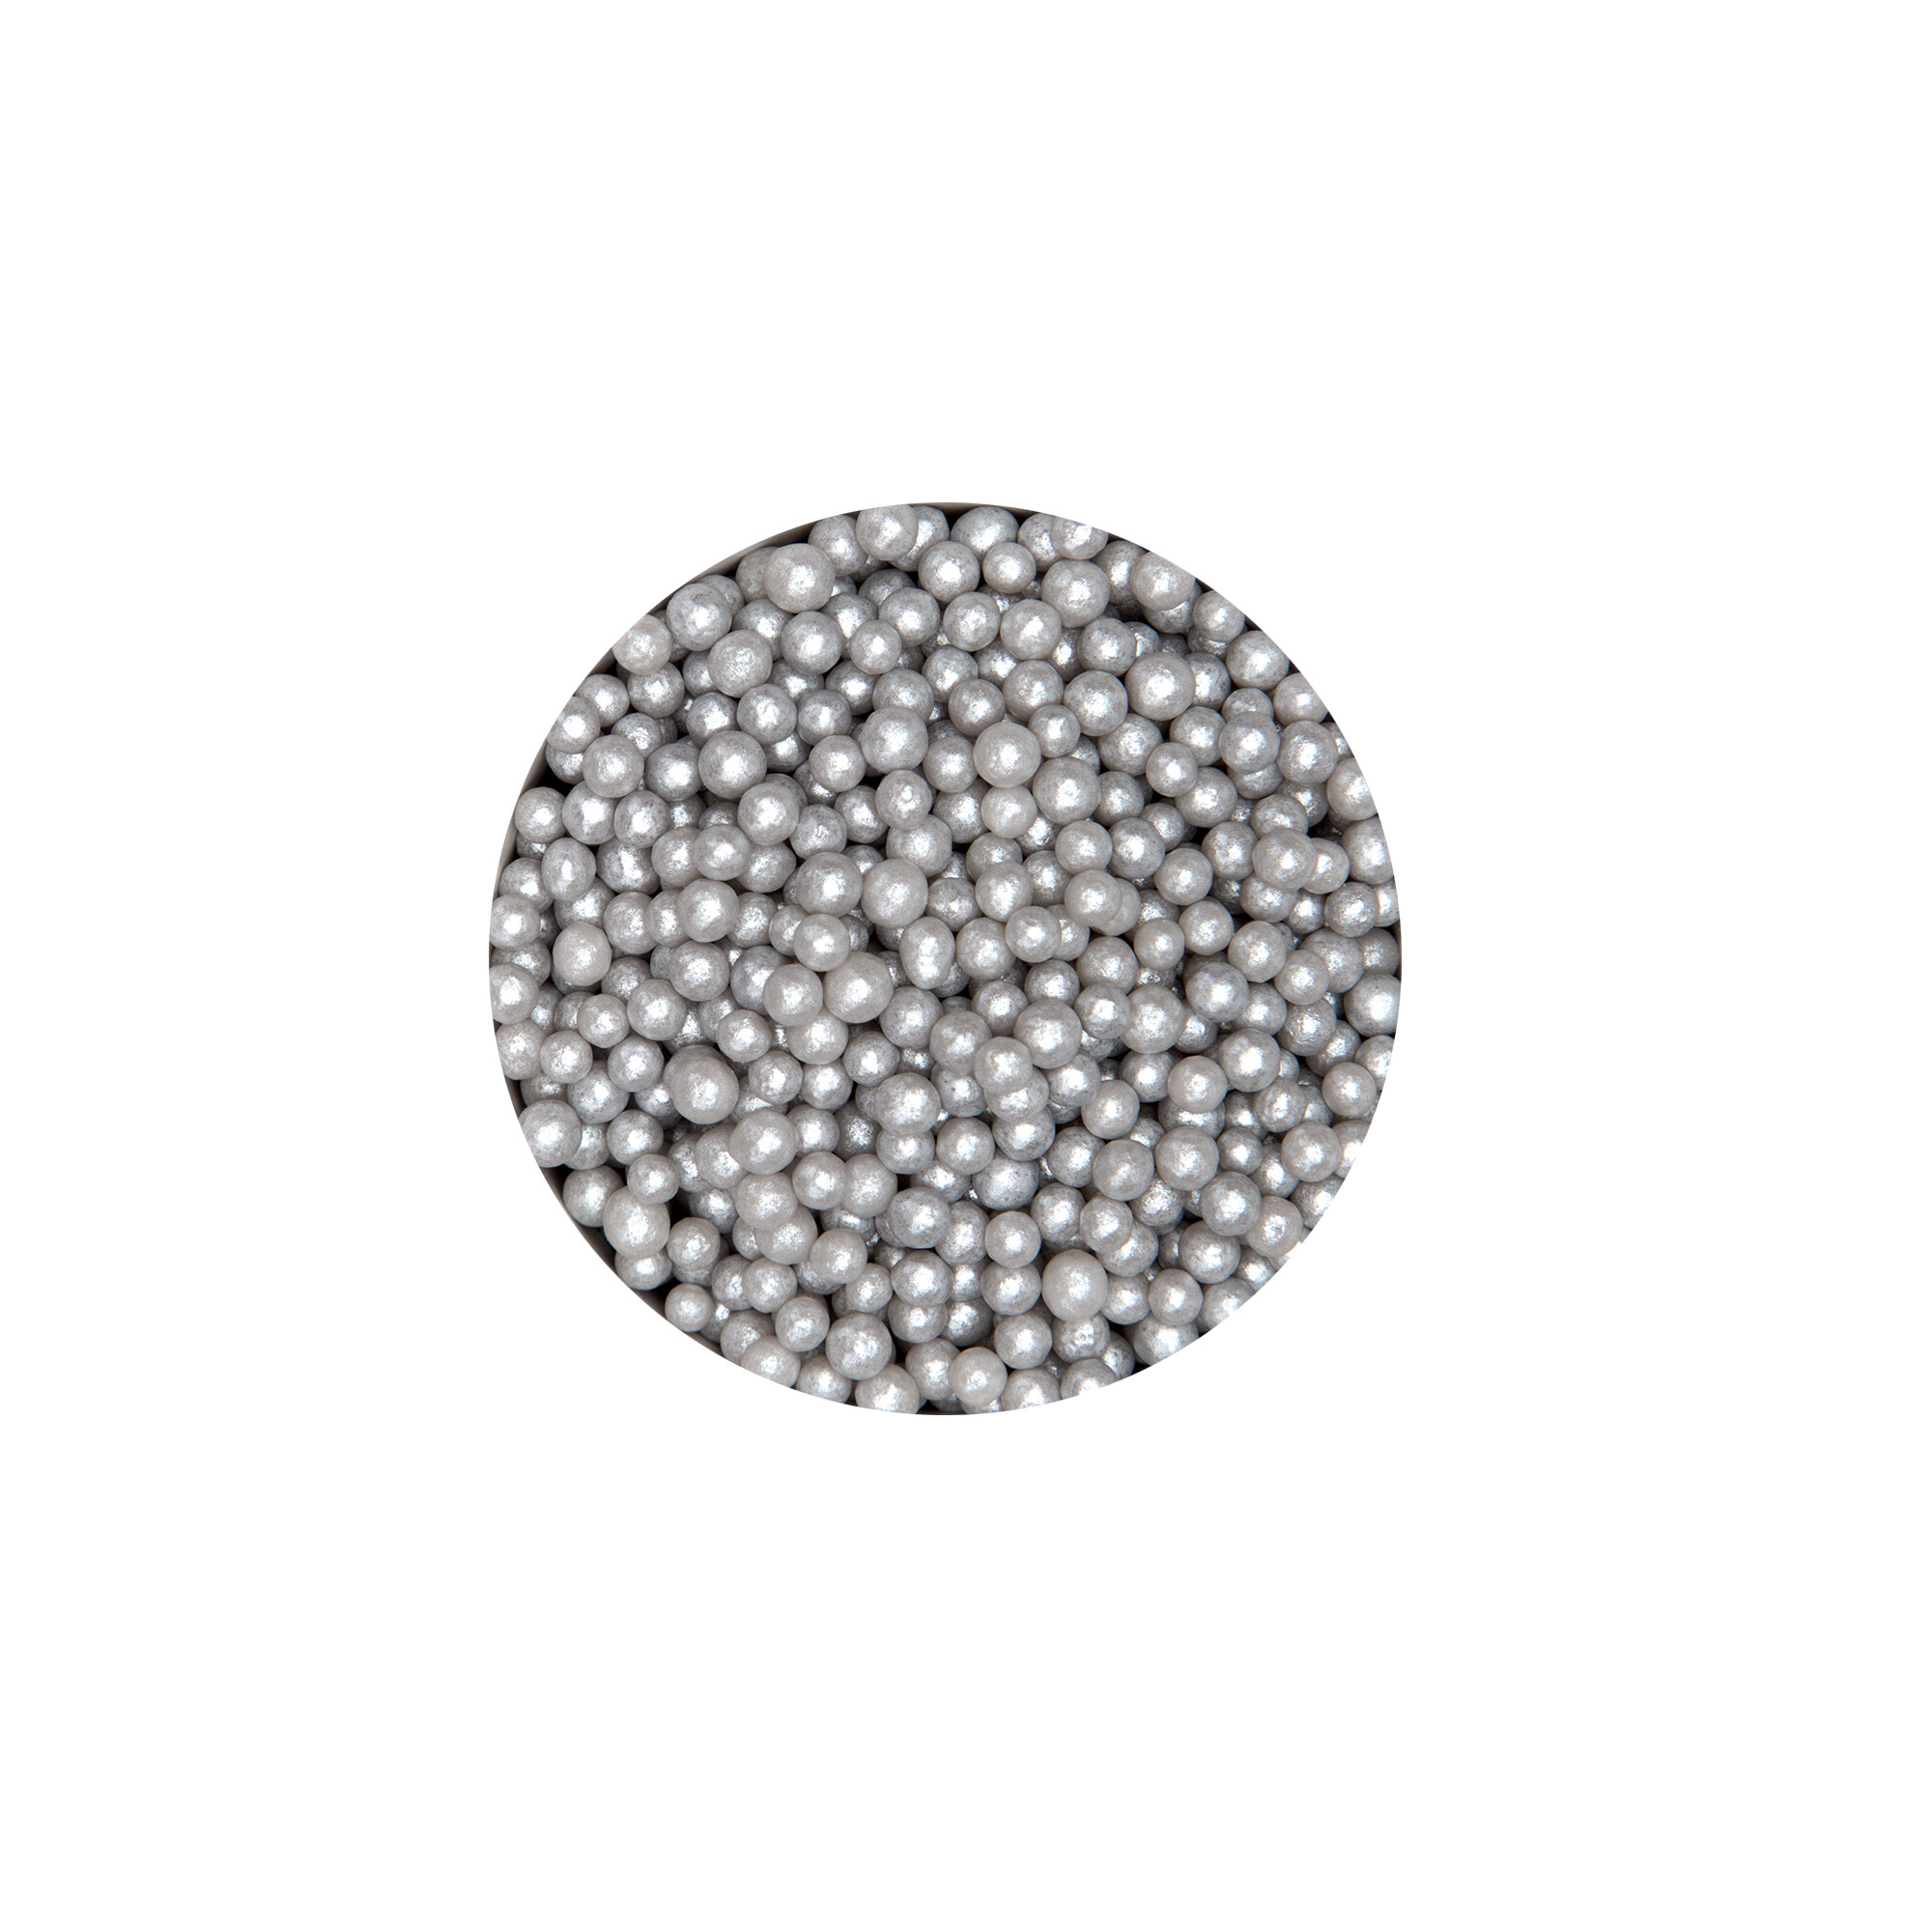 Edible sprinkle decoration – Pearls Mini